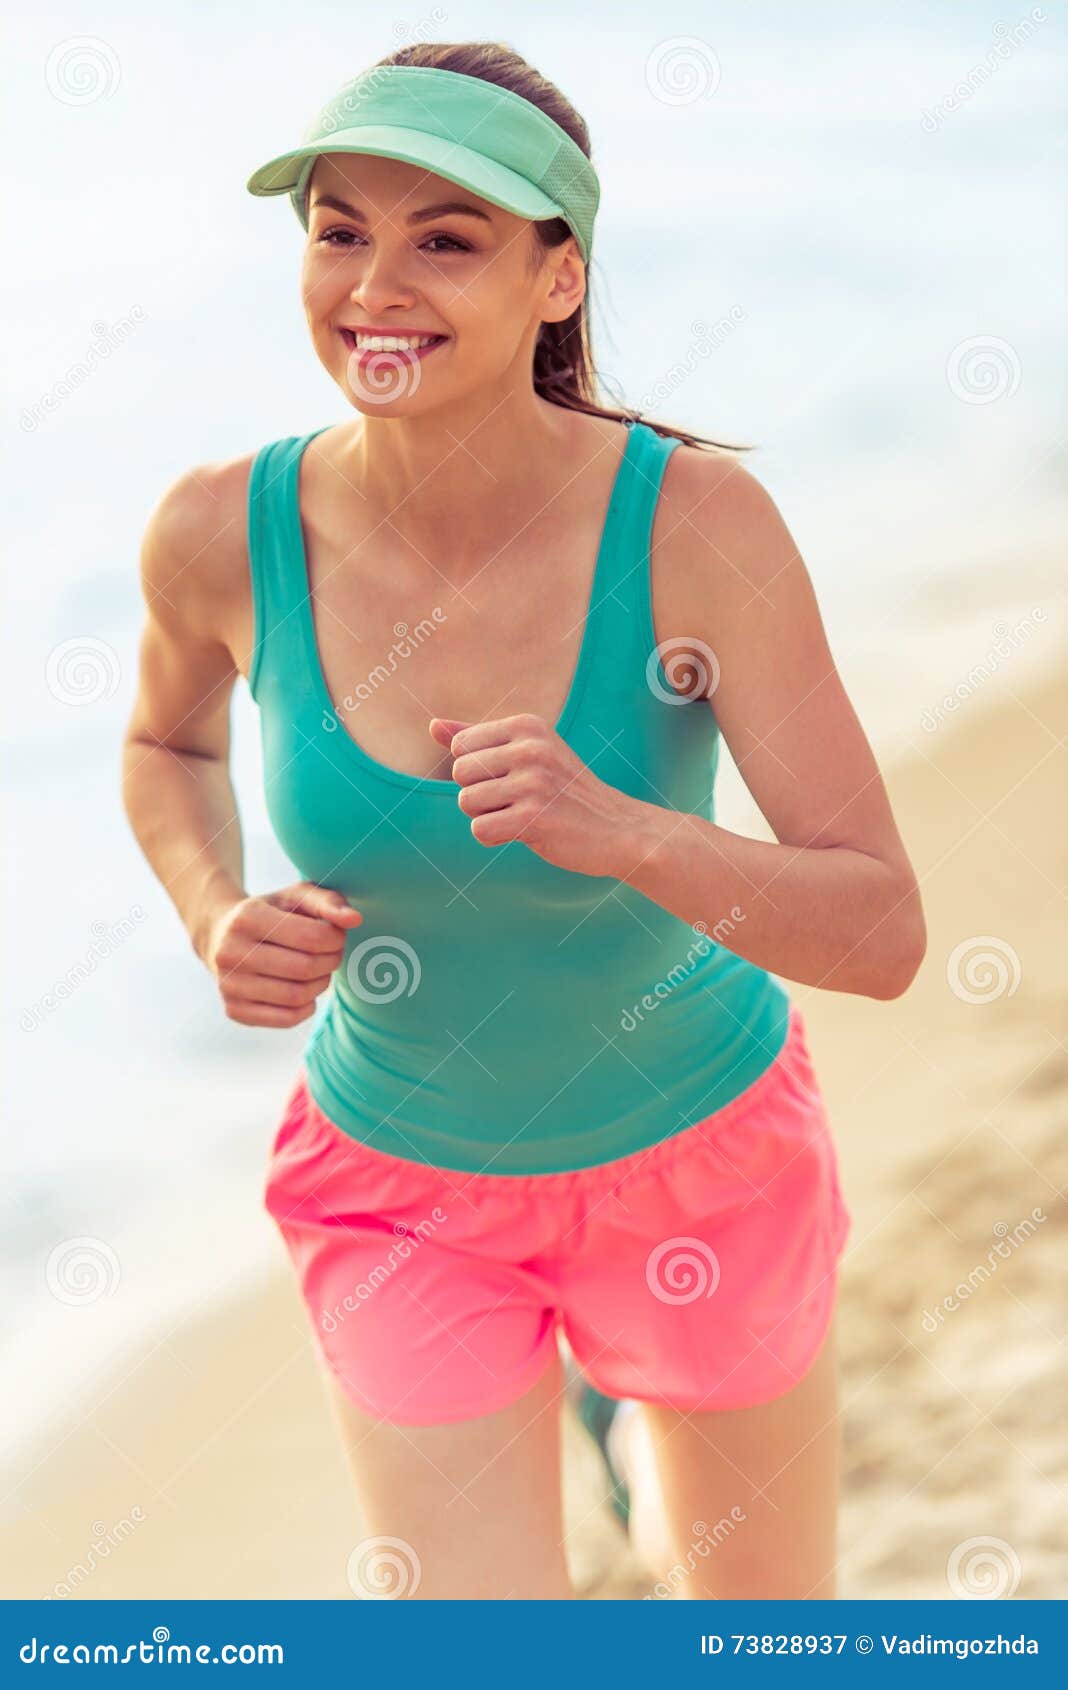 Beautiful Sport Girl on the Beach Stock Image - Image of caucasian ...